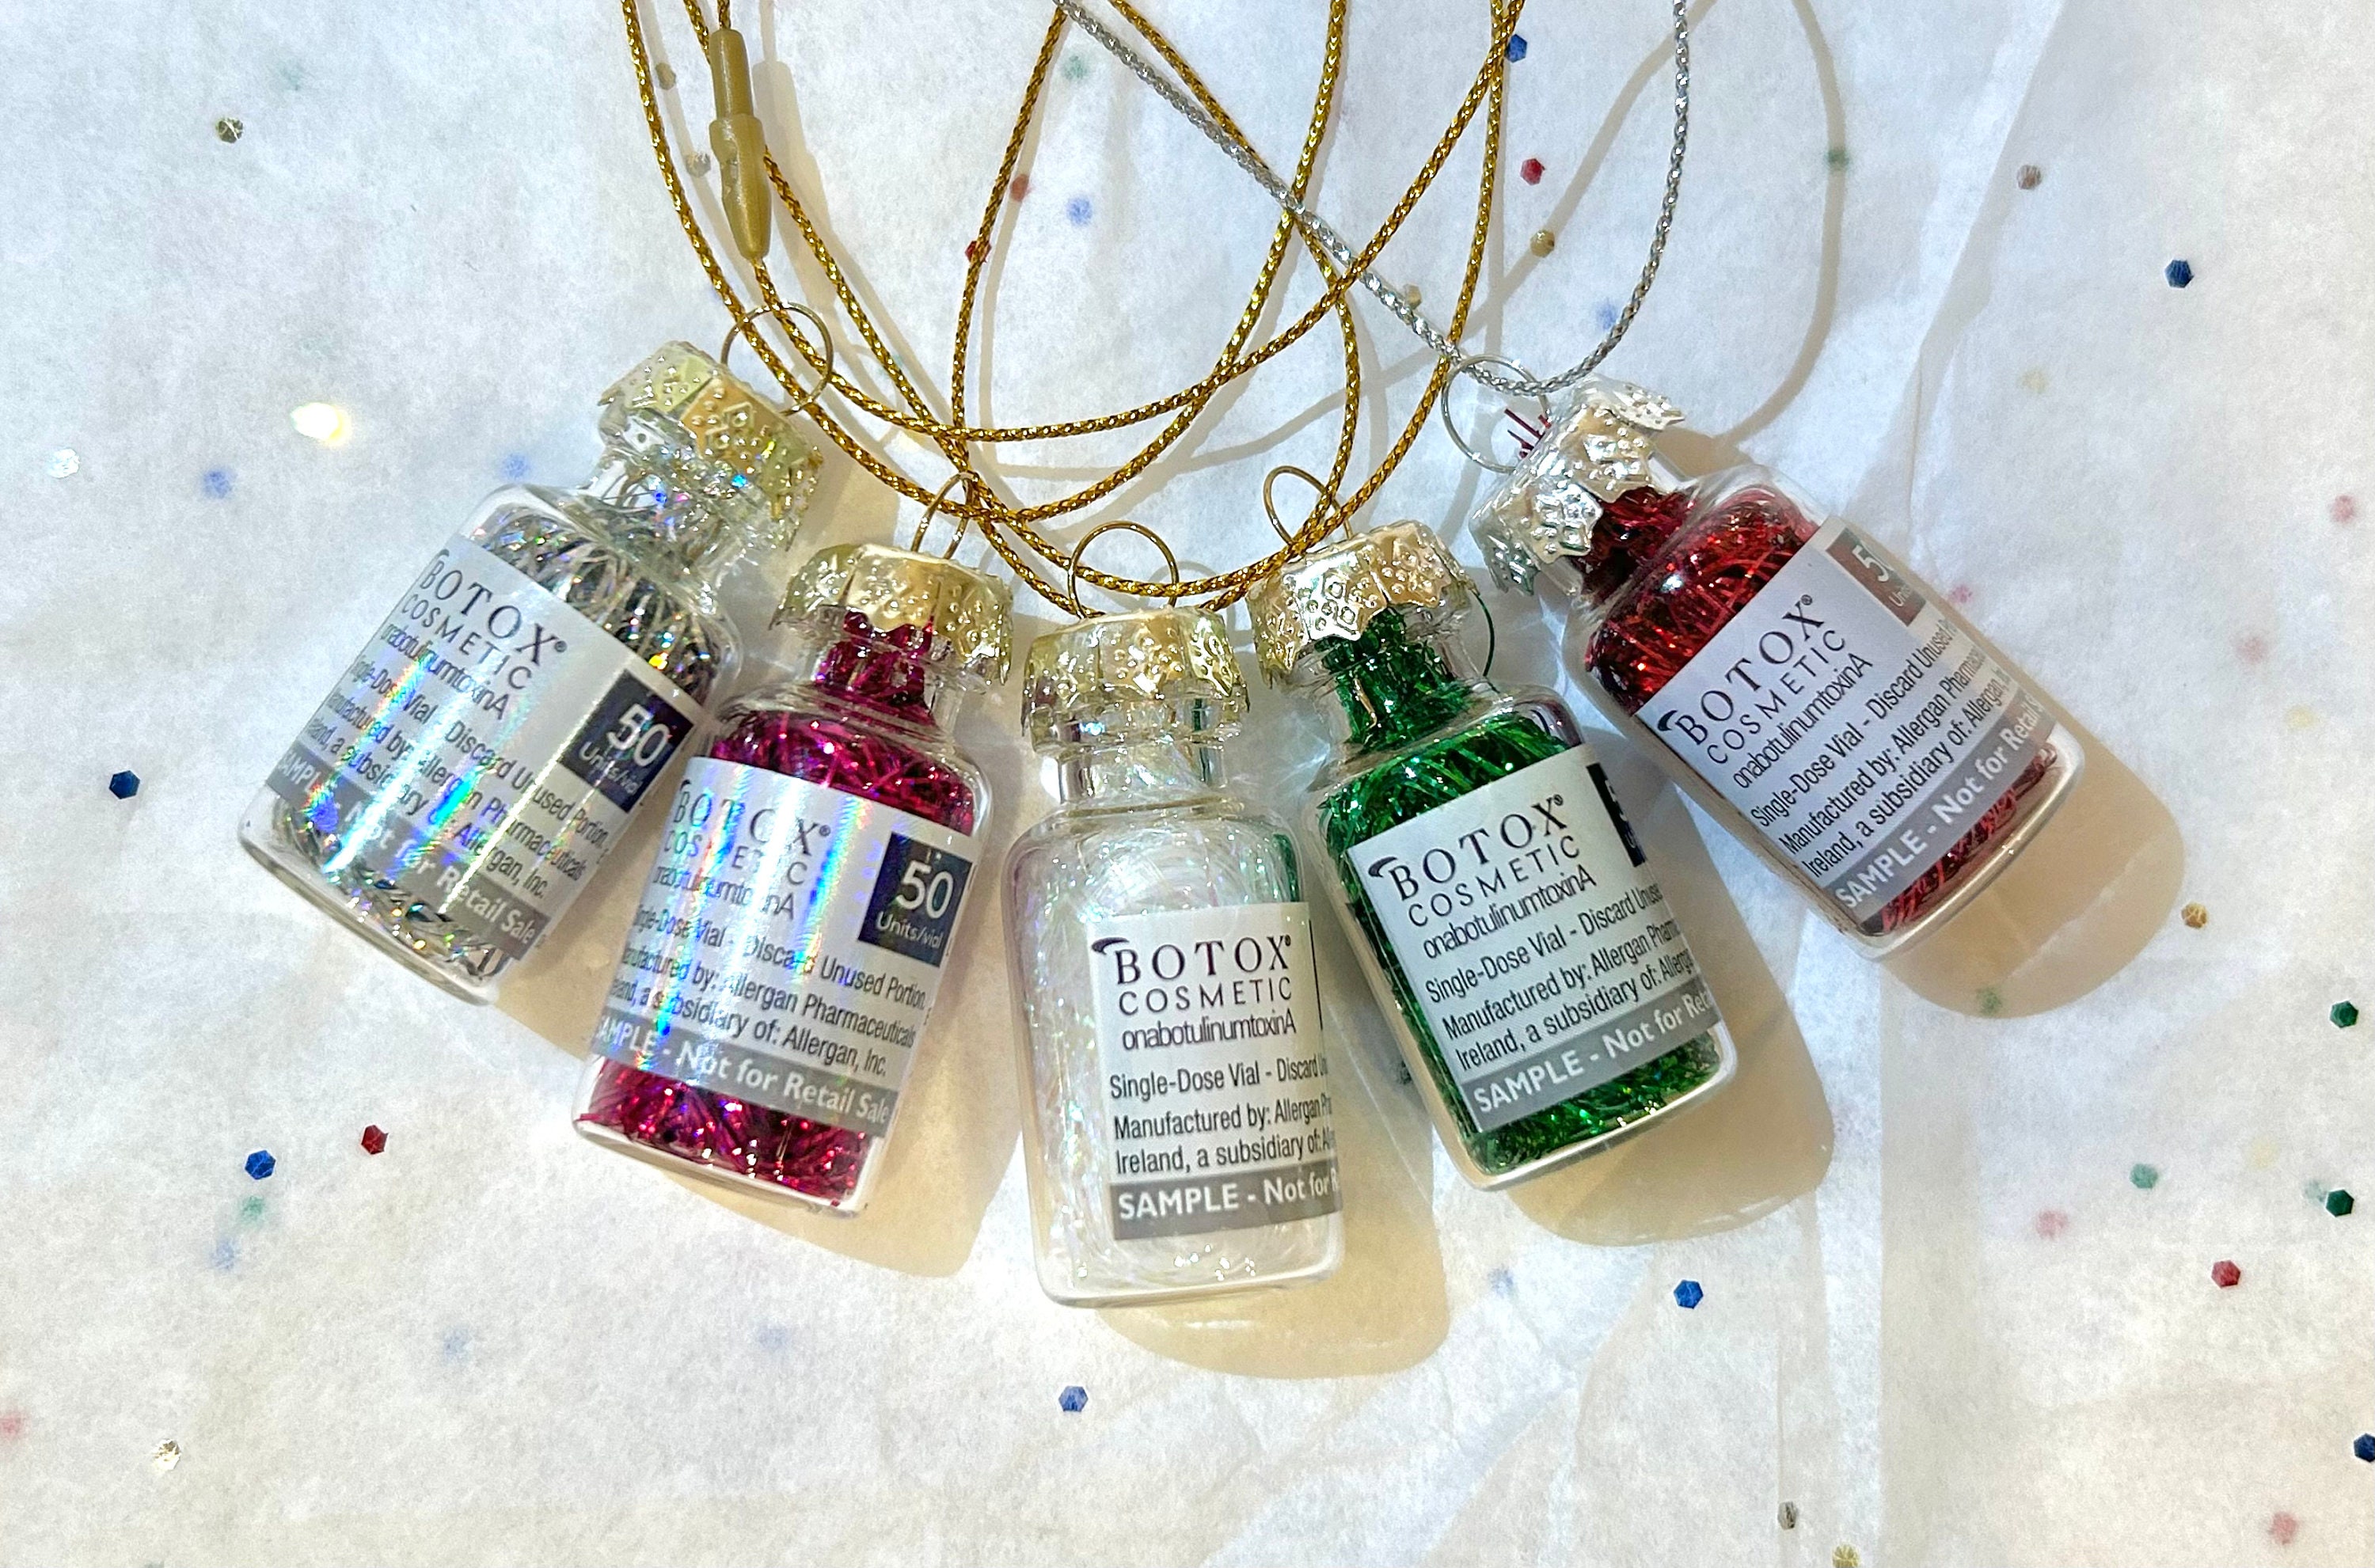 Upcycled medication vials into tiny Christmas ornaments to